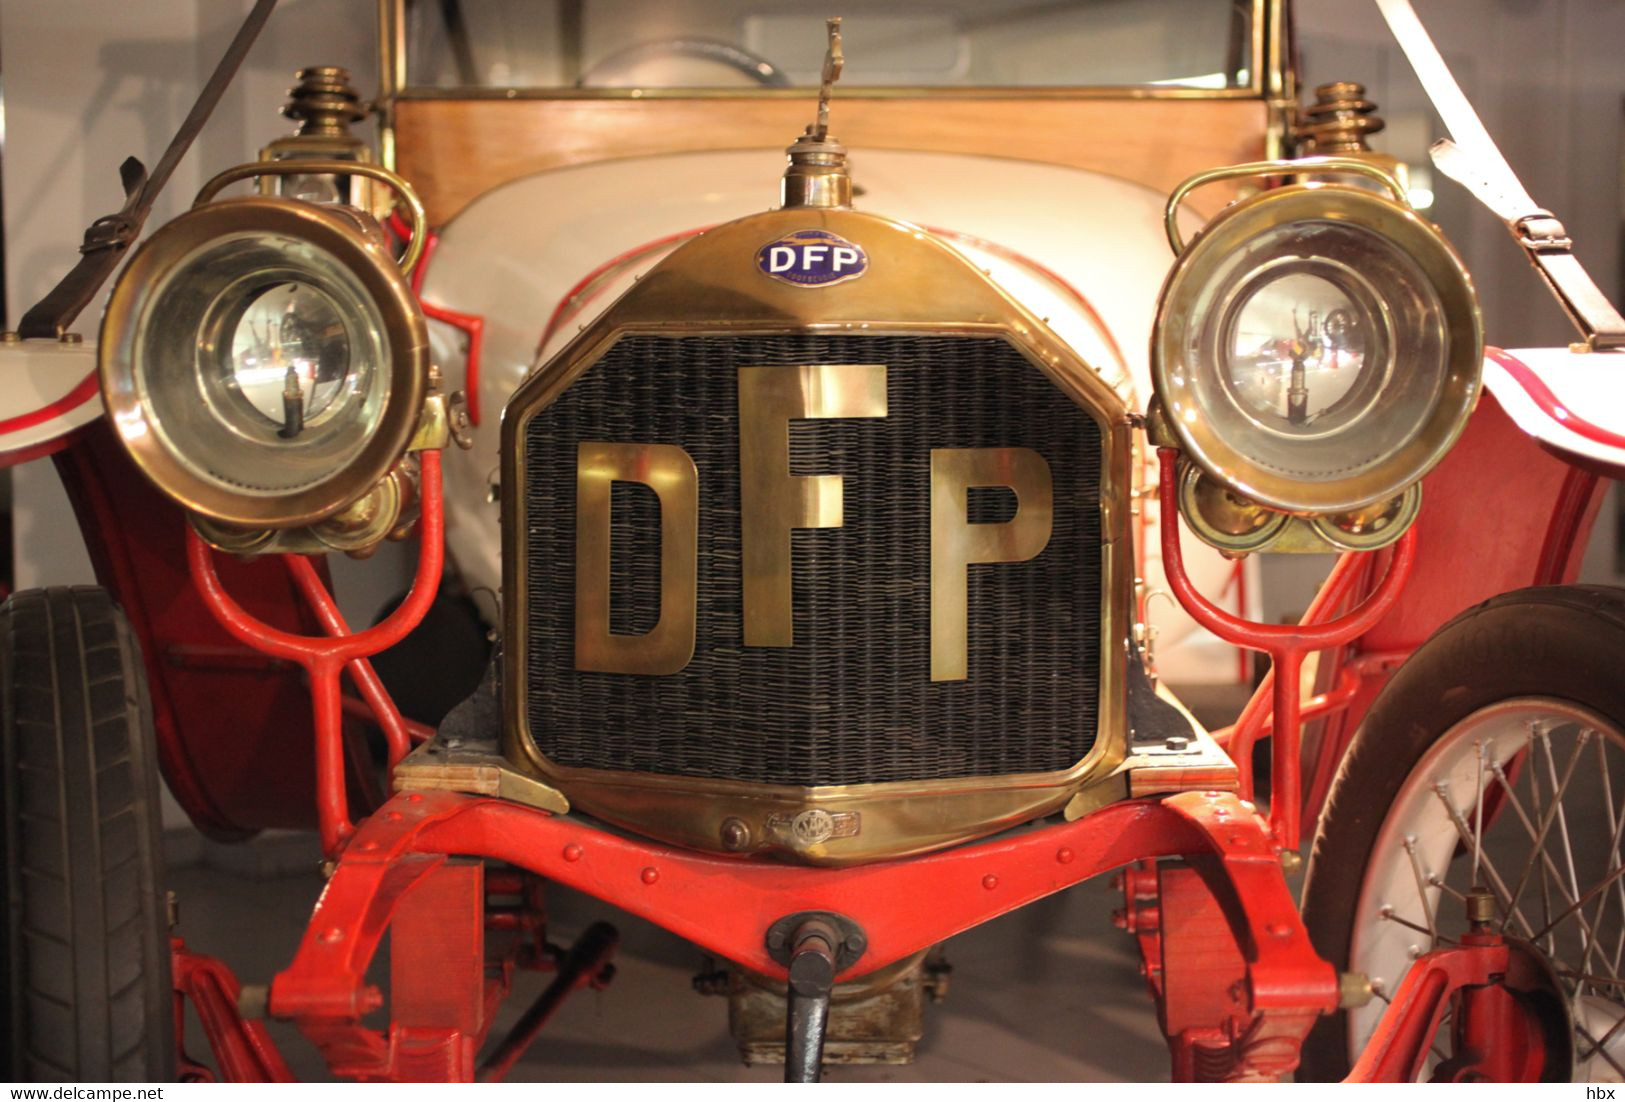 Automobiles Doriot, Flandrin & Parant - 1918 - Automobile